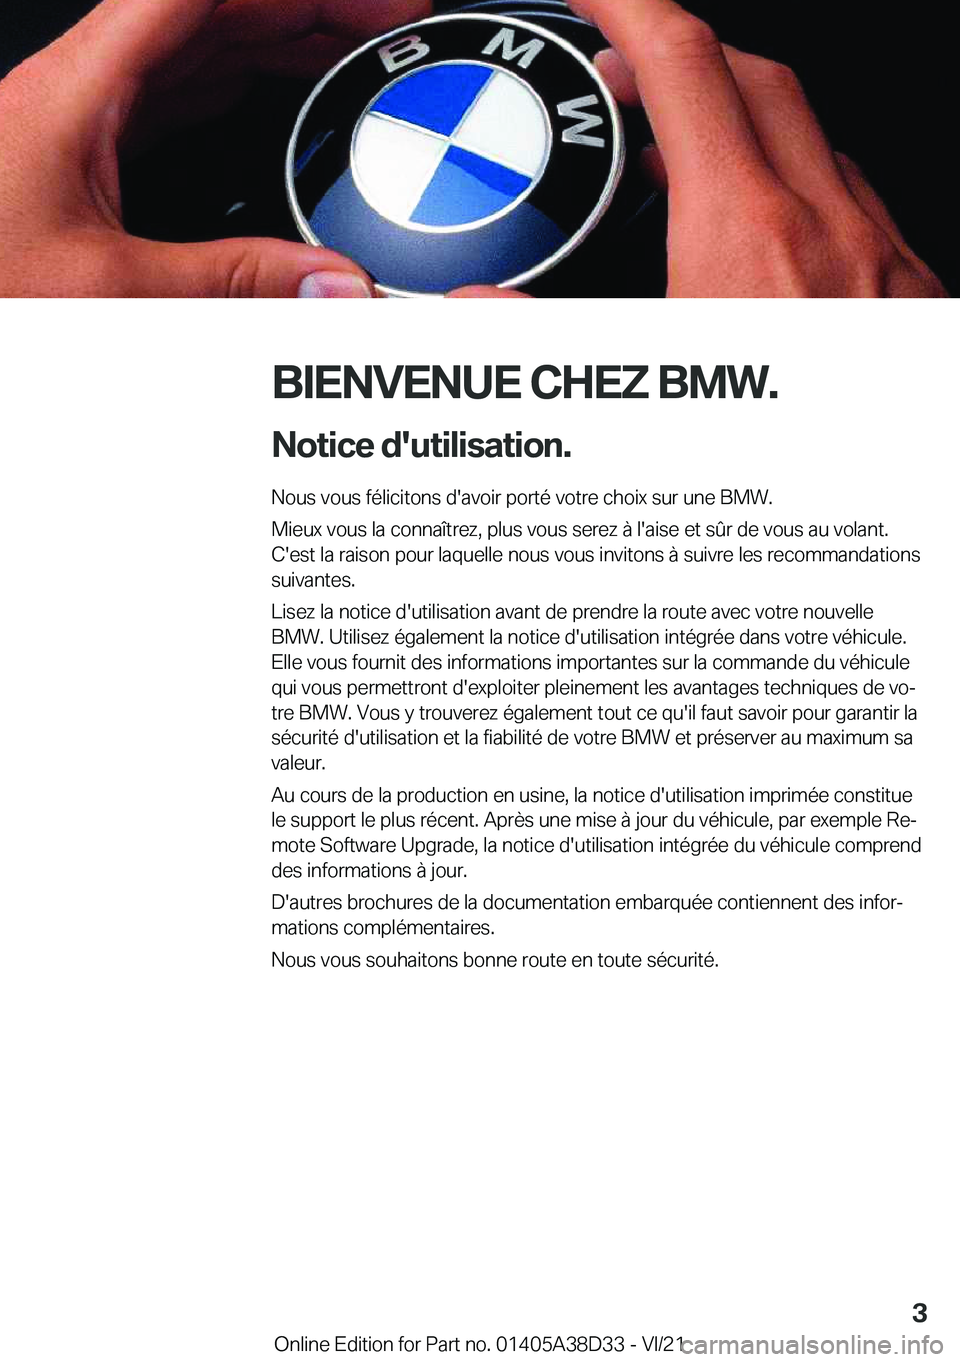 BMW 8 SERIES 2022  Notices Demploi (in French) �B�I�E�N�V�E�N�U�E��C�H�E�Z��B�M�W�.�N�o�t�i�c�e��d�'�u�t�i�l�i�s�a�t�i�o�n�.
�N�o�u�s��v�o�u�s��f�é�l�i�c�i�t�o�n�s��d�'�a�v�o�i�r��p�o�r�t�é��v�o�t�r�e��c�h�o�i�x��s�u�r��u�n�e�